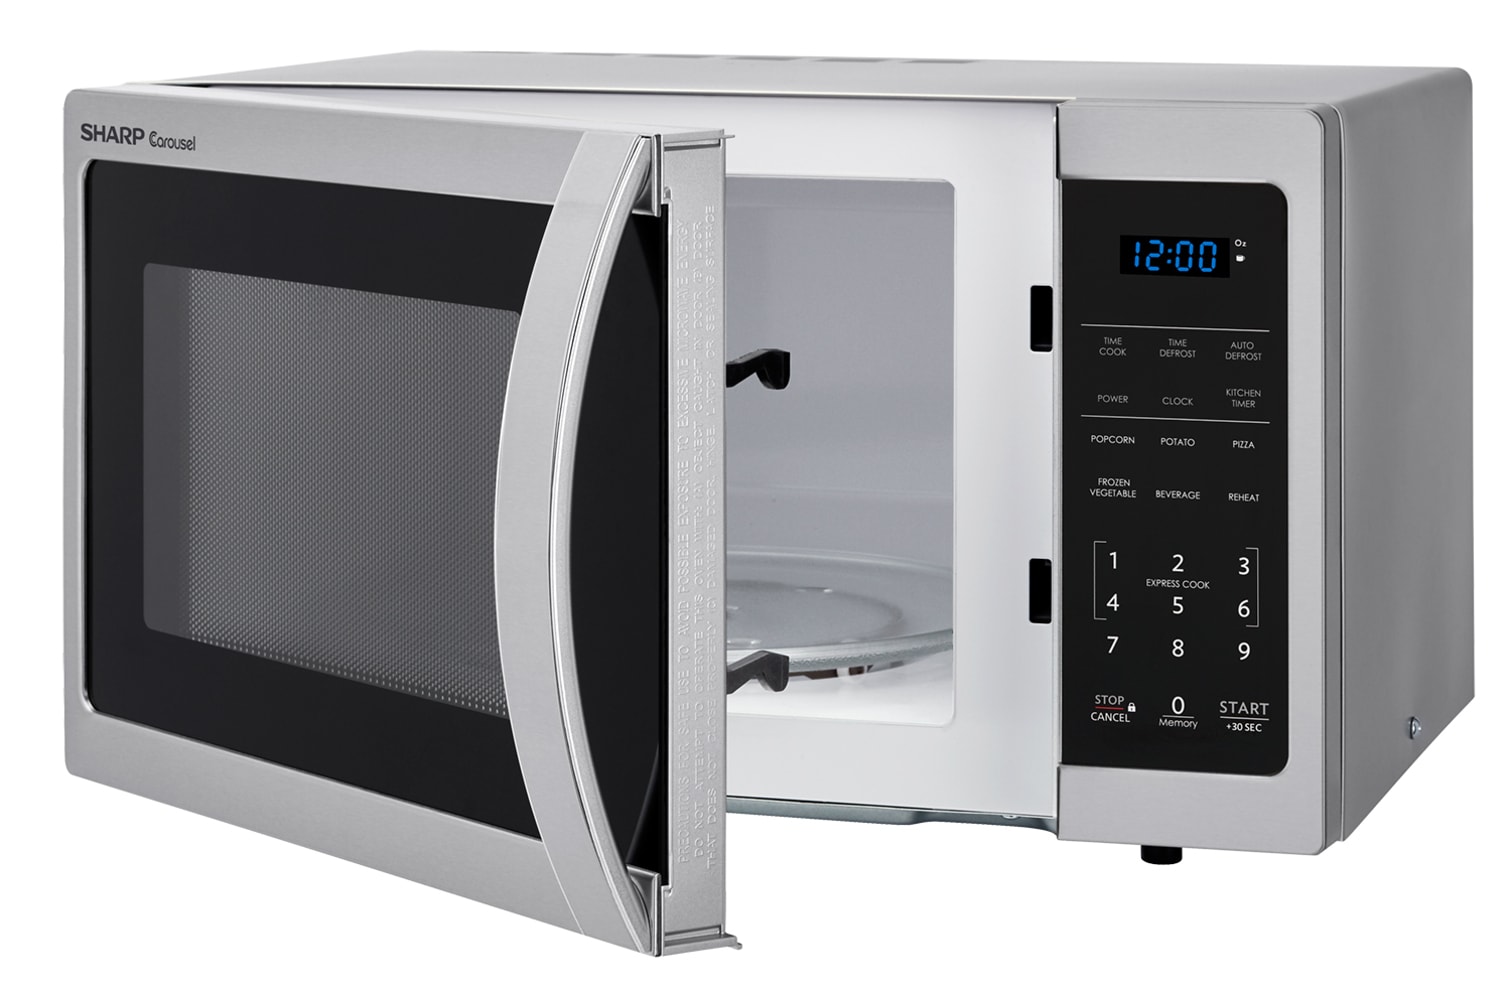 Sharp Carousel 1.3-cubic foot 1000-watt White Countertop Microwave Oven -  Bed Bath & Beyond - 12099503